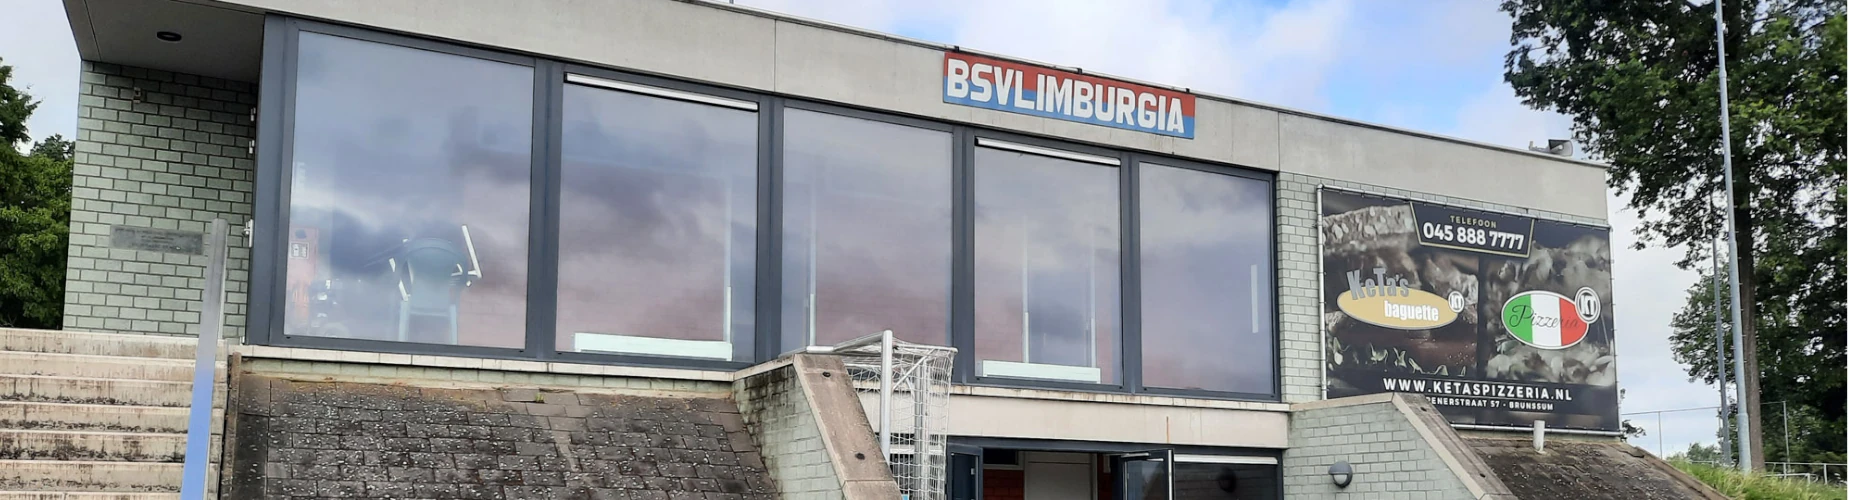 Banner - BSV Limburgia - Brunssum